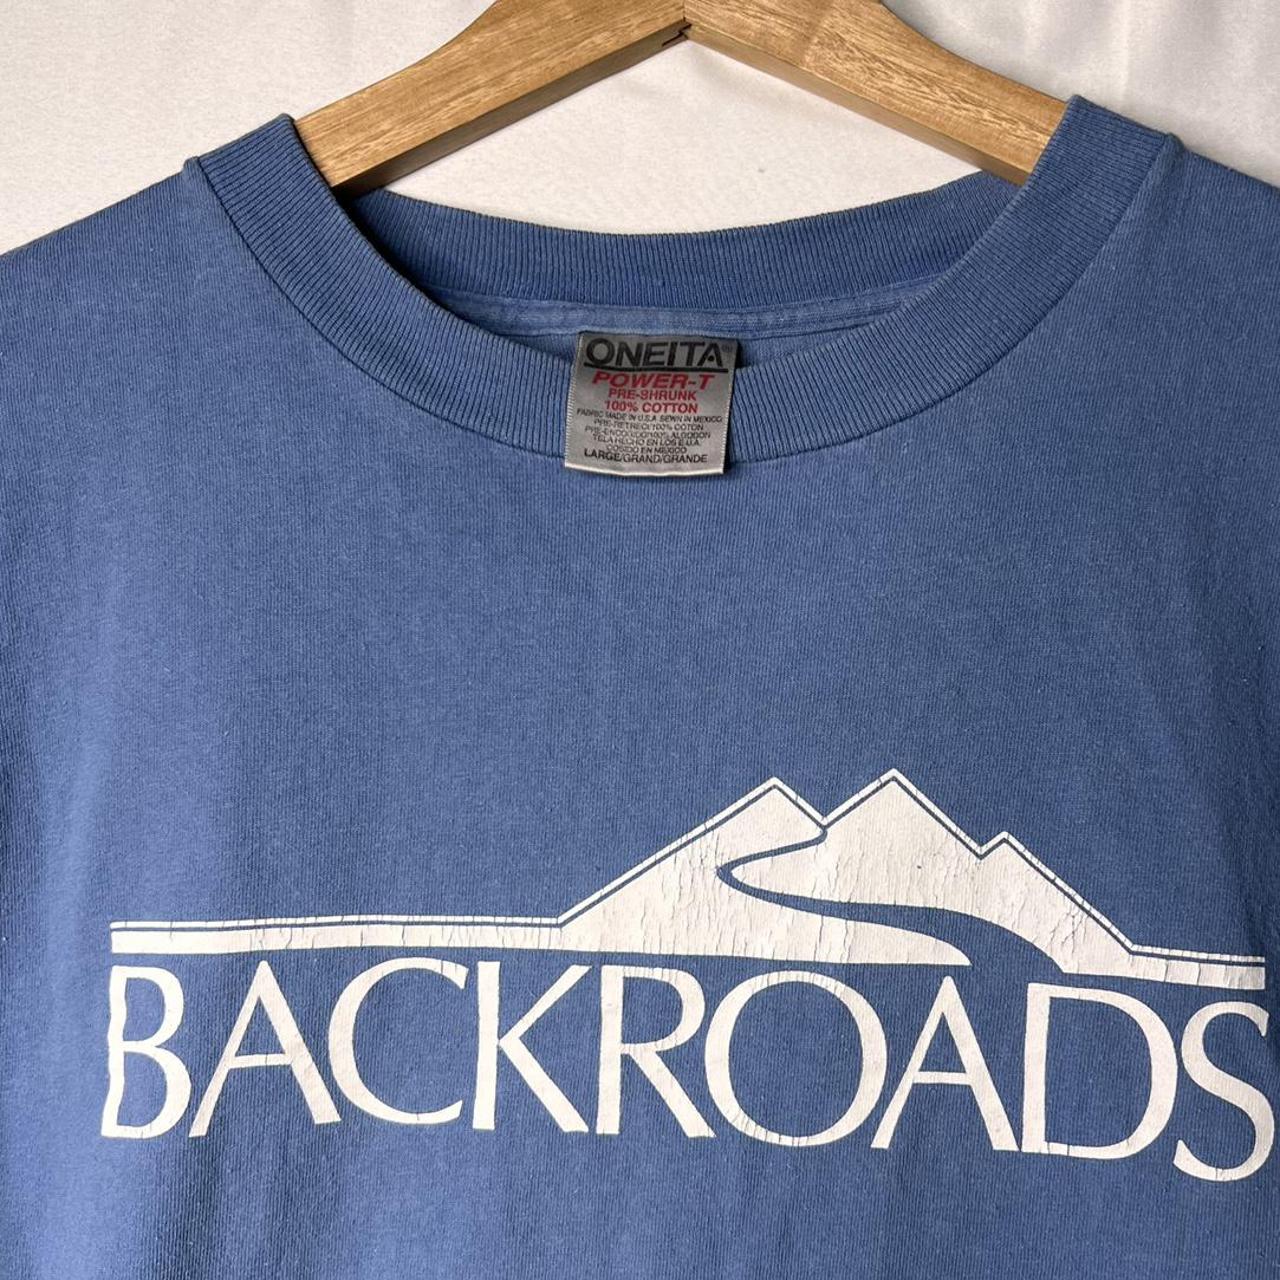 Product Image 4 - Vintage 90s “Backroads” Graphic T-Shirt

Size